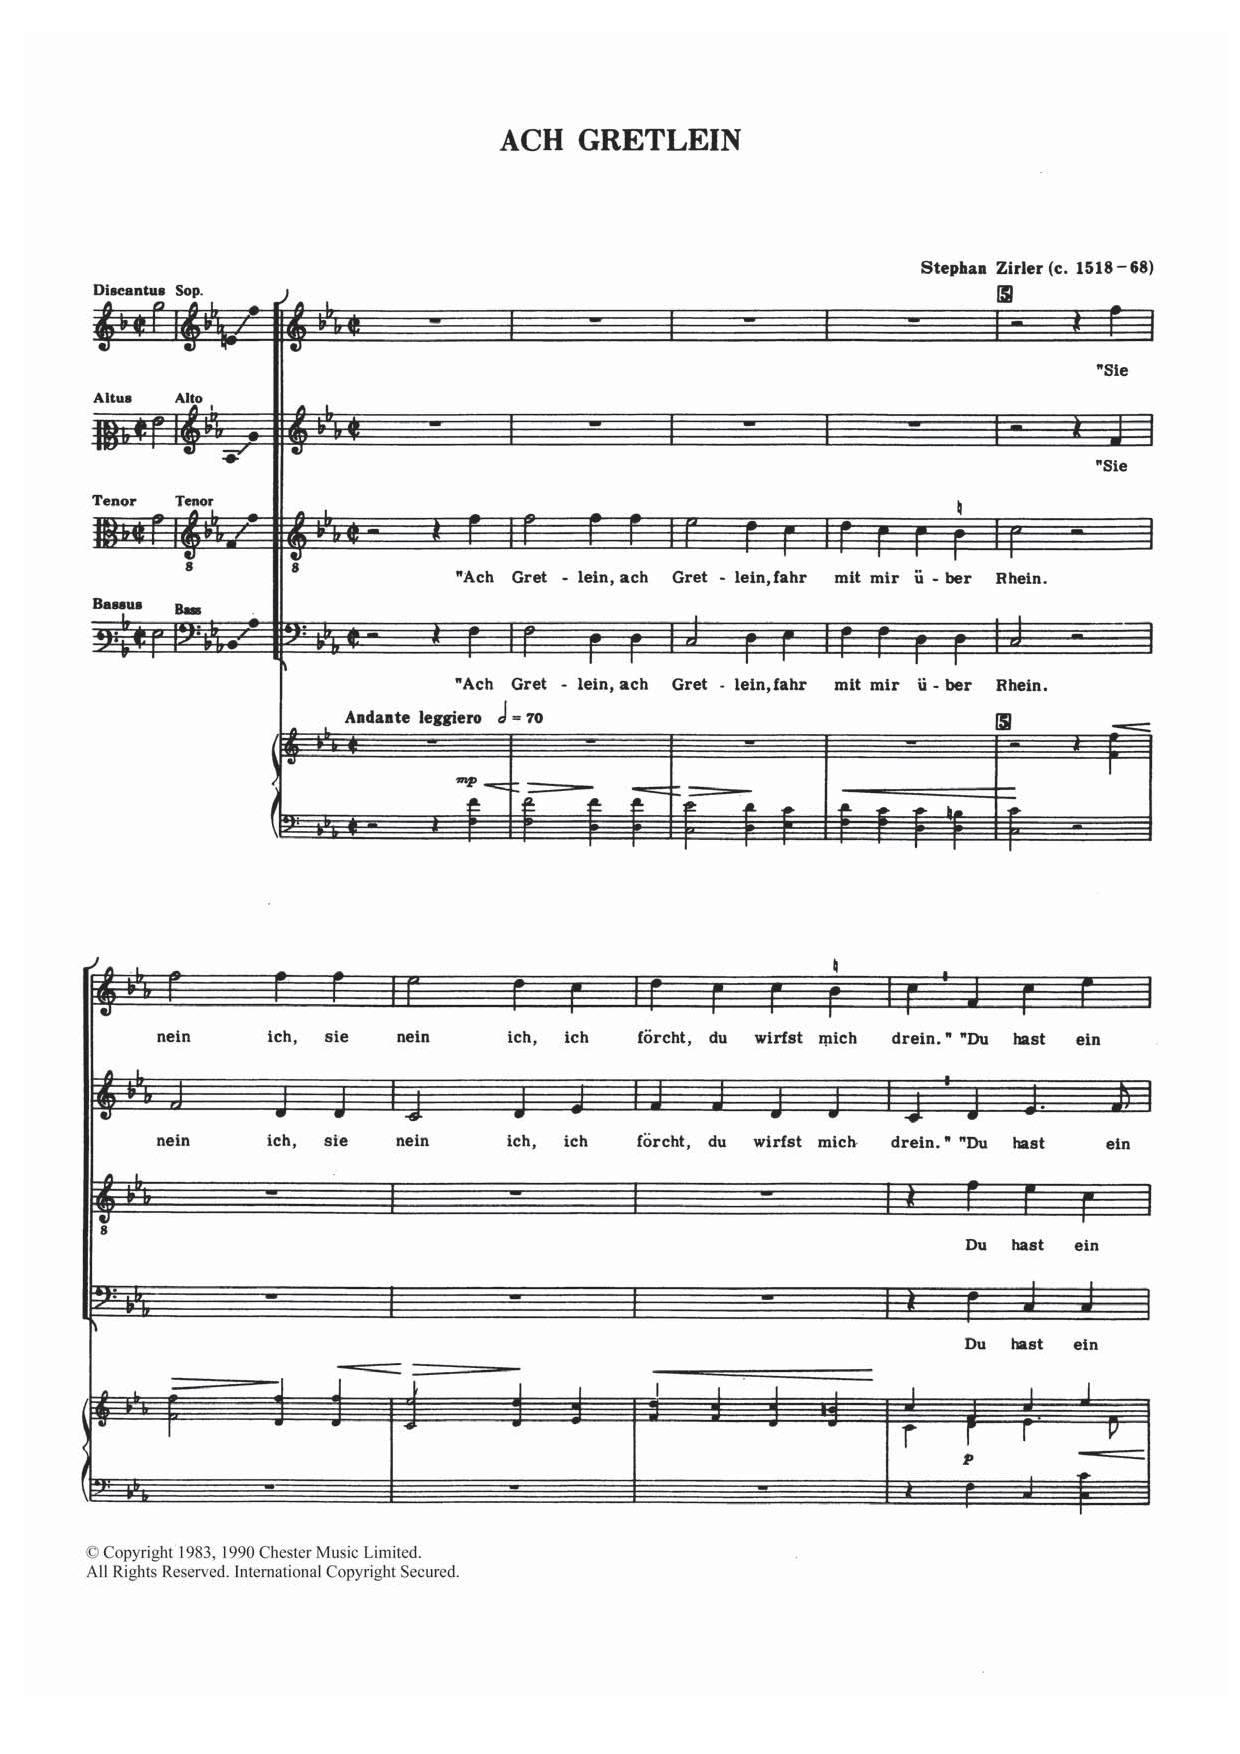 Stephan Zirler Ach Gretlein Sheet Music Notes & Chords for Choir - Download or Print PDF